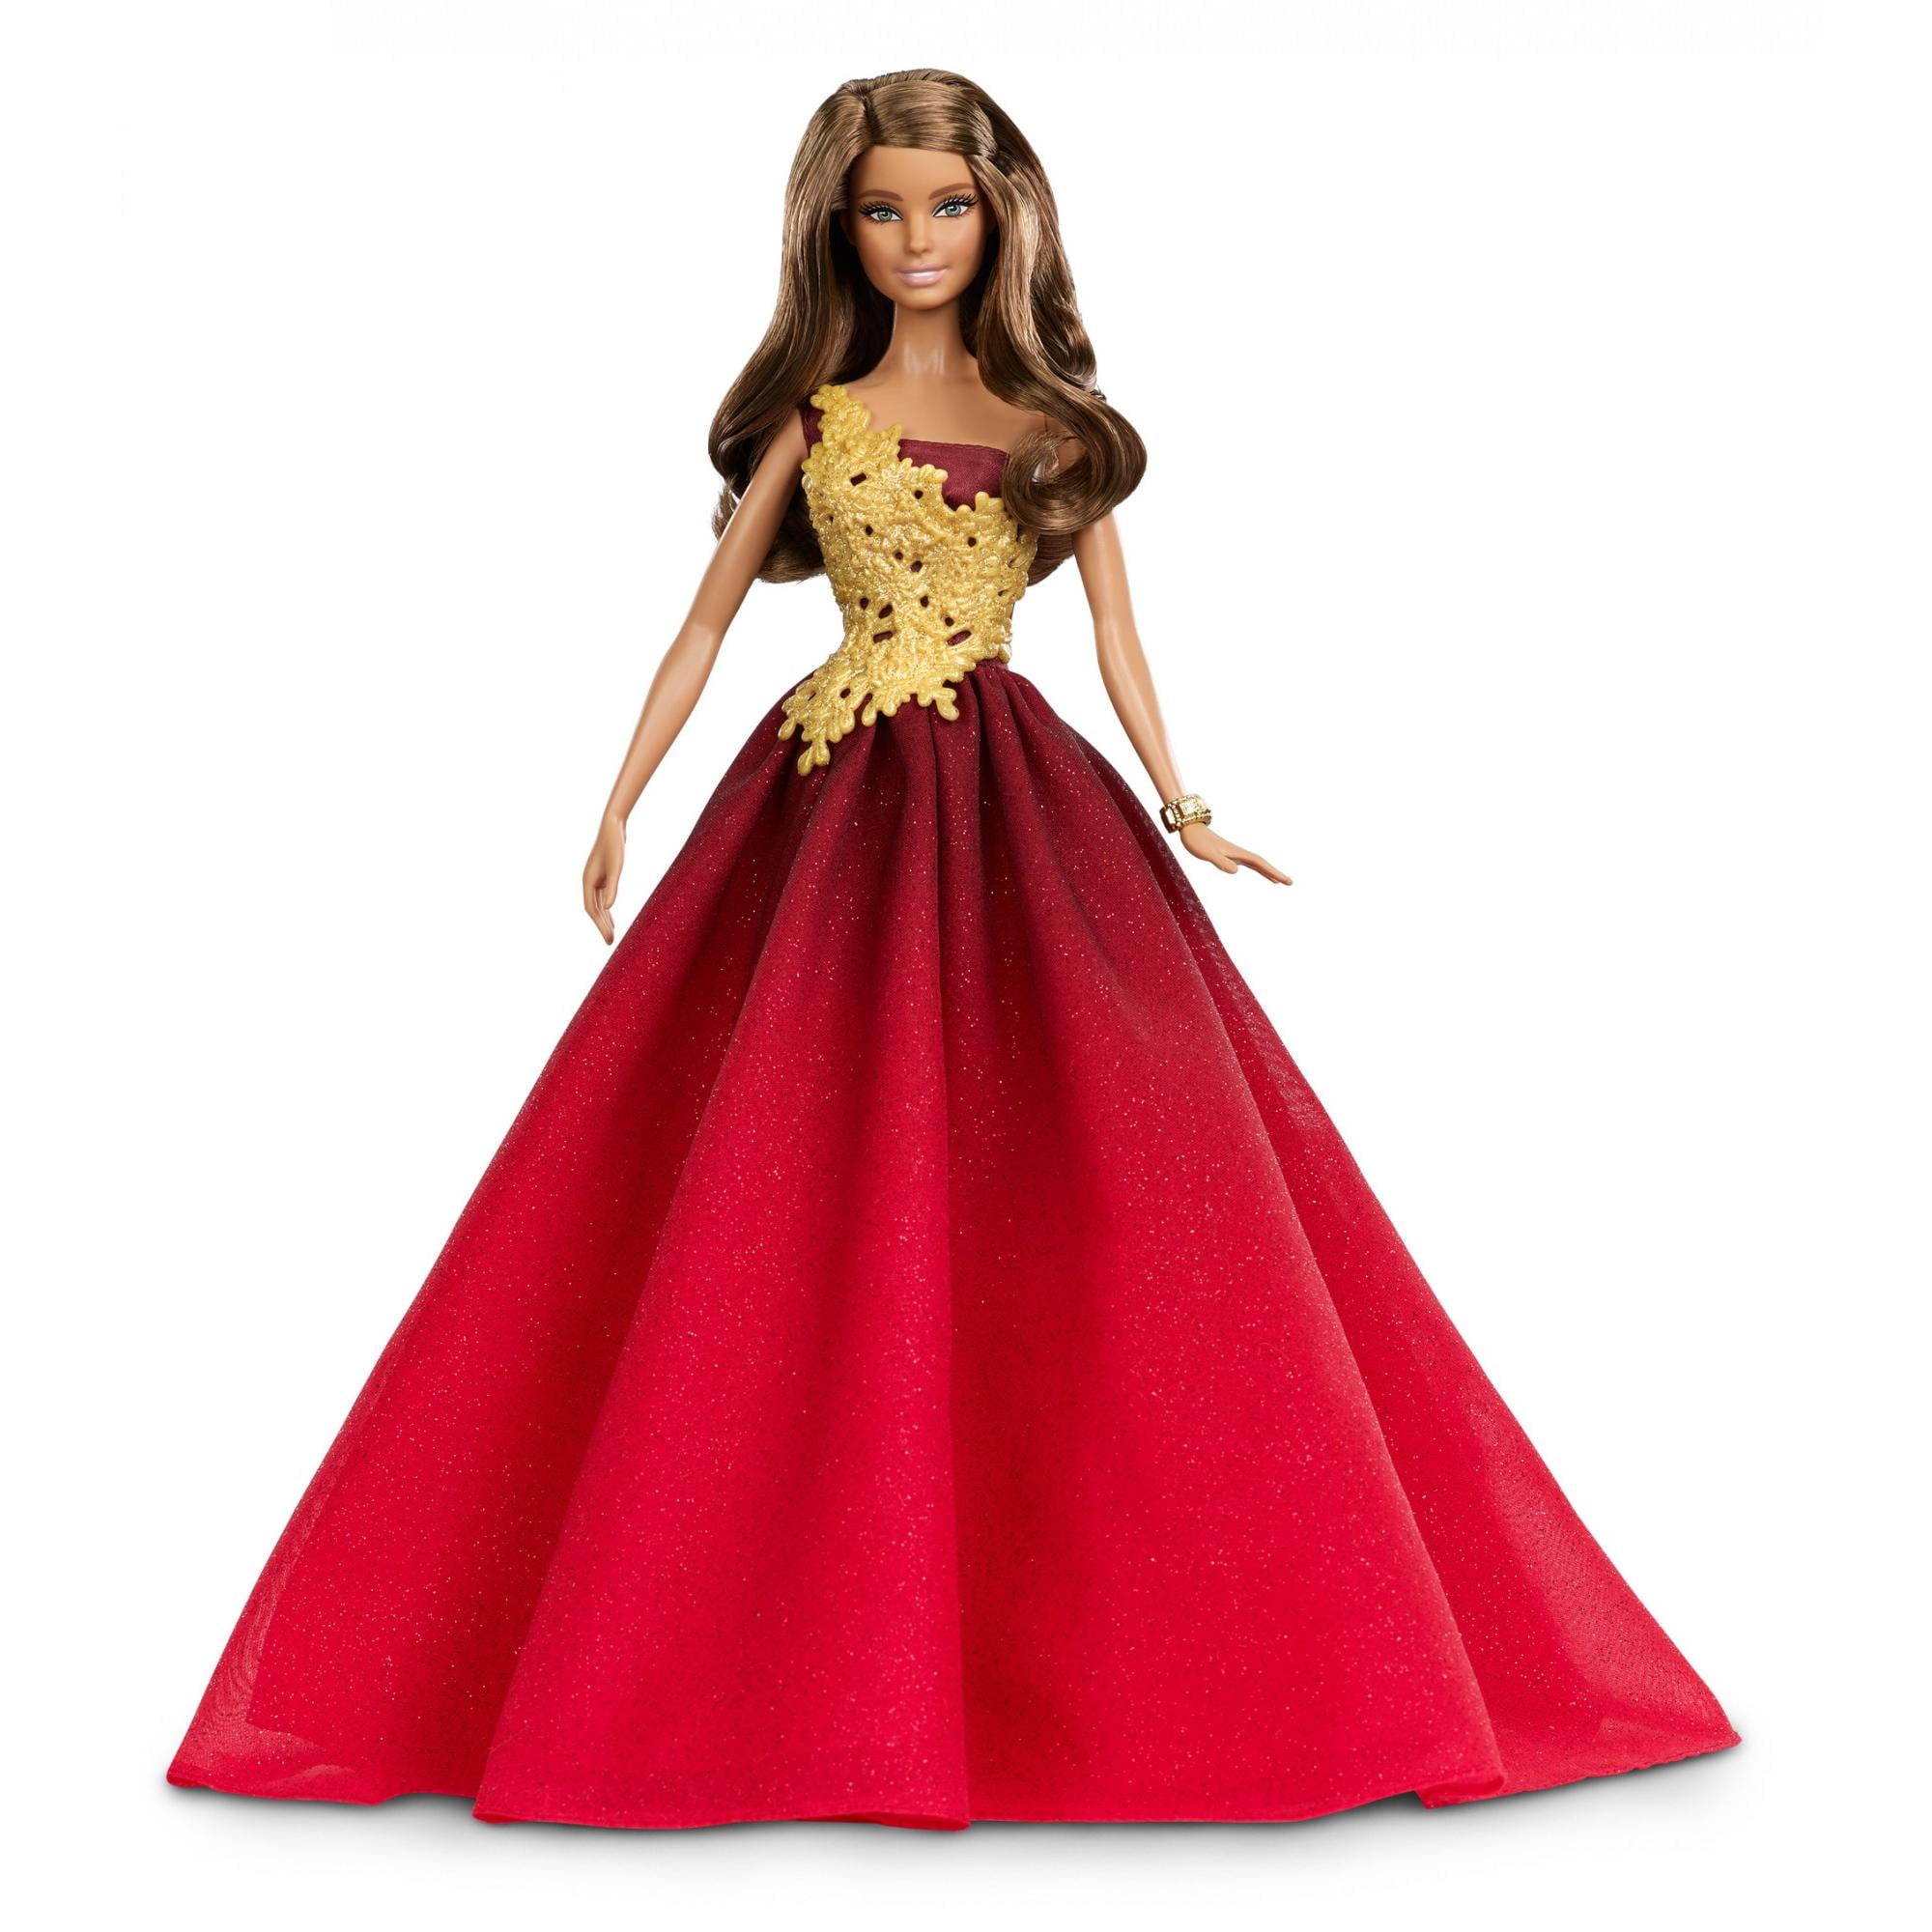 Ravelry: Red long dress for Barbie doll pattern by Ella Kovalyova